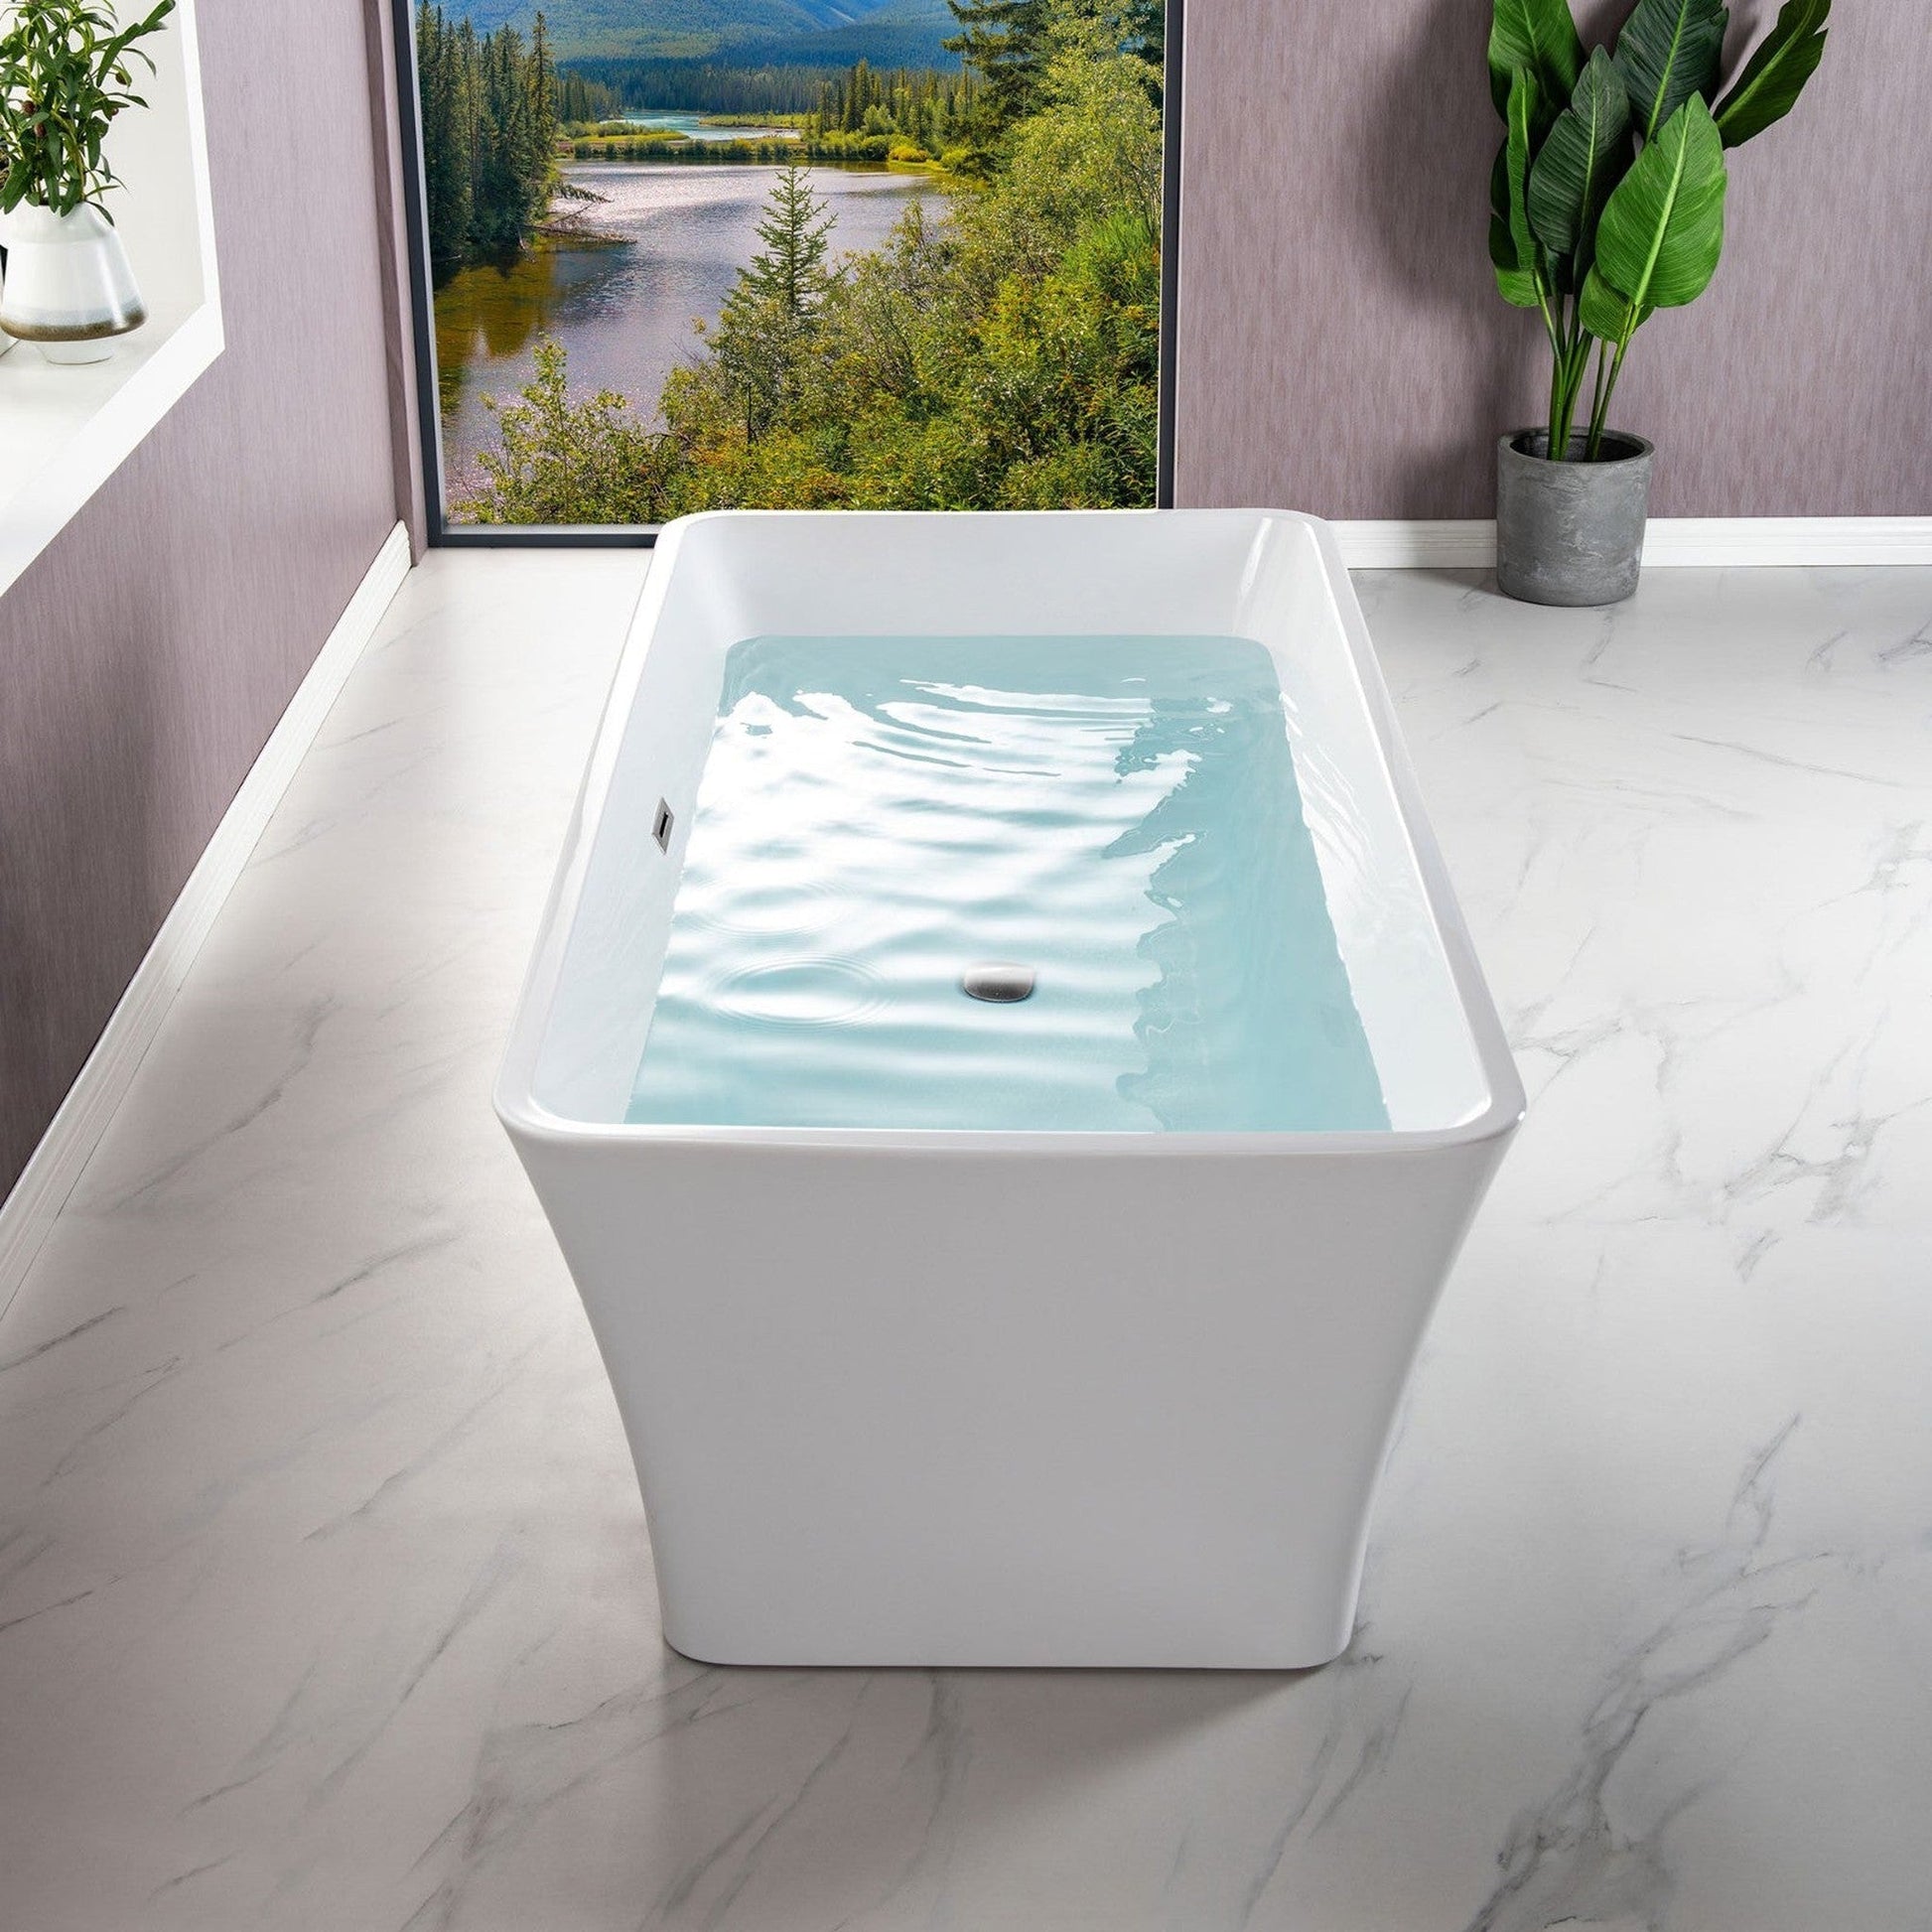 WoodBridge B-1509 59" White Acrylic Freestanding Soaking Bathtub With Chrome Drain, Overflow, F0071CHVT Tub Filler and Caddy Tray